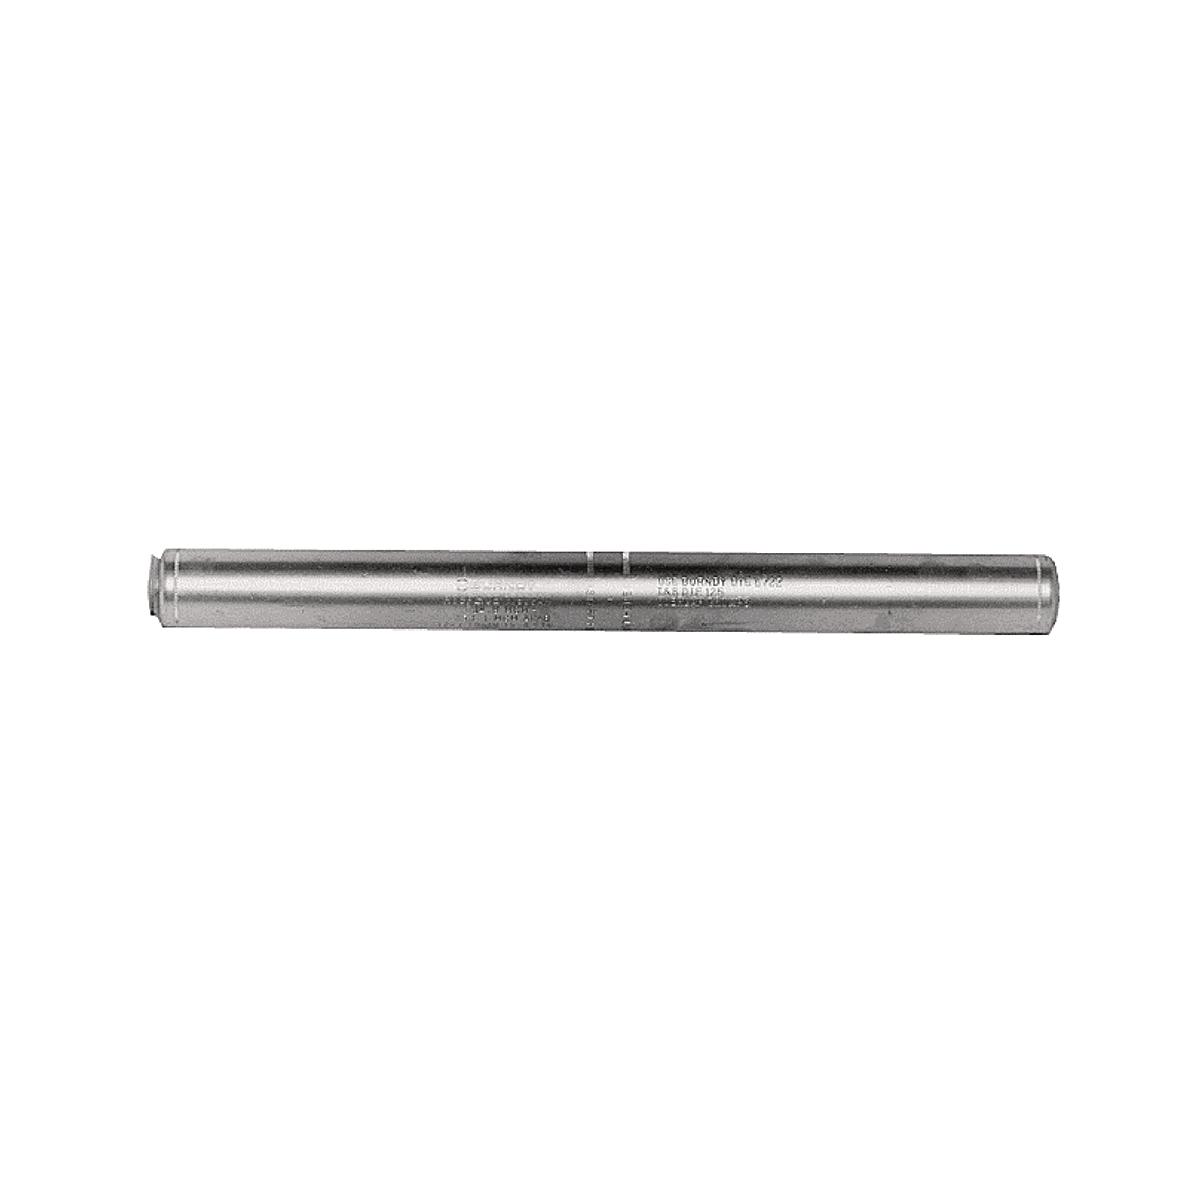 Hubbell YTS48RS Steel Sleeve for Full tension Splice Kit, Length: 9.00 IN, Die Index: 726. 